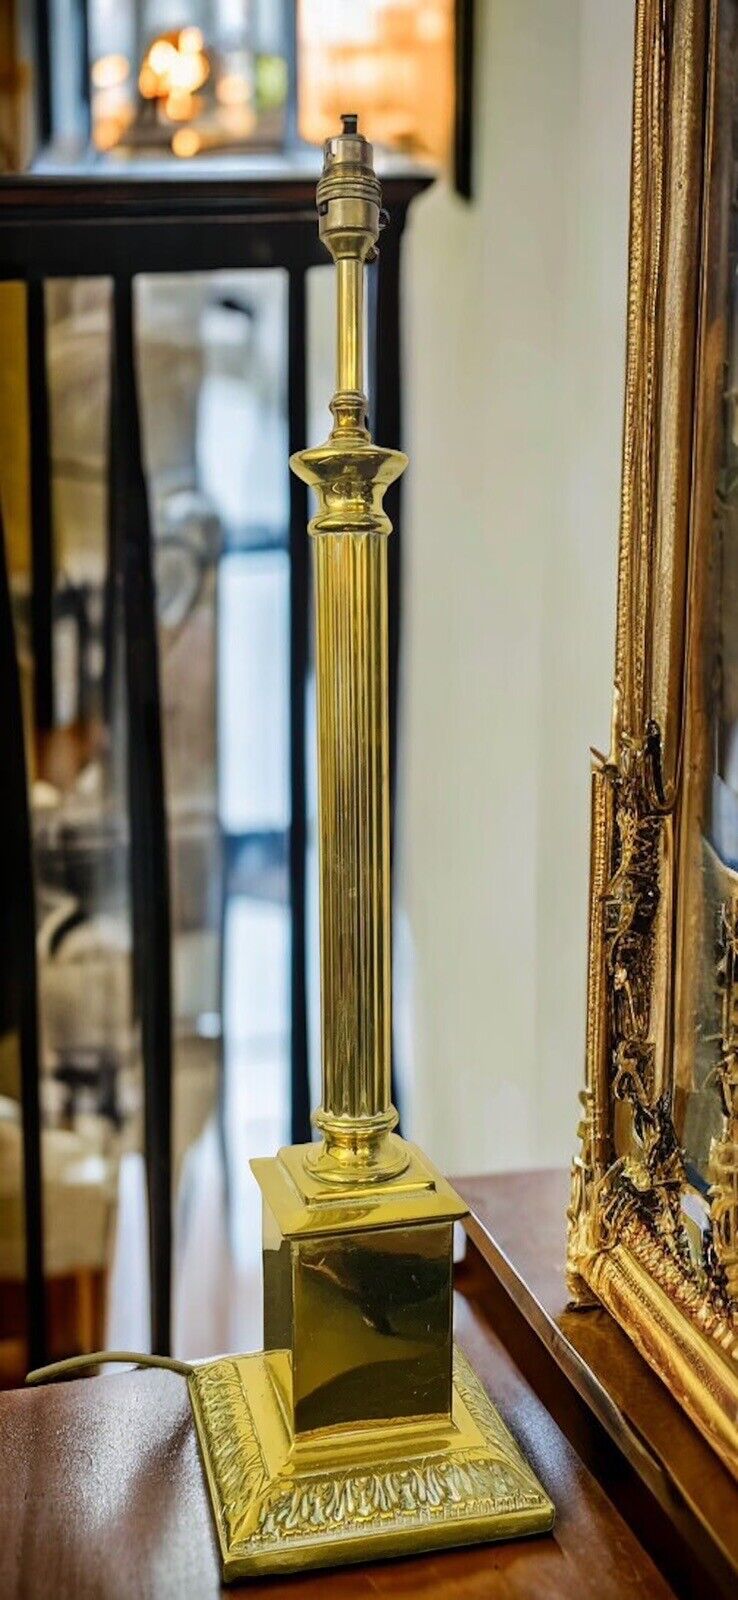 Antique Large Heavy Top Quality Corninthian Brass Table Lamp - 72cm High